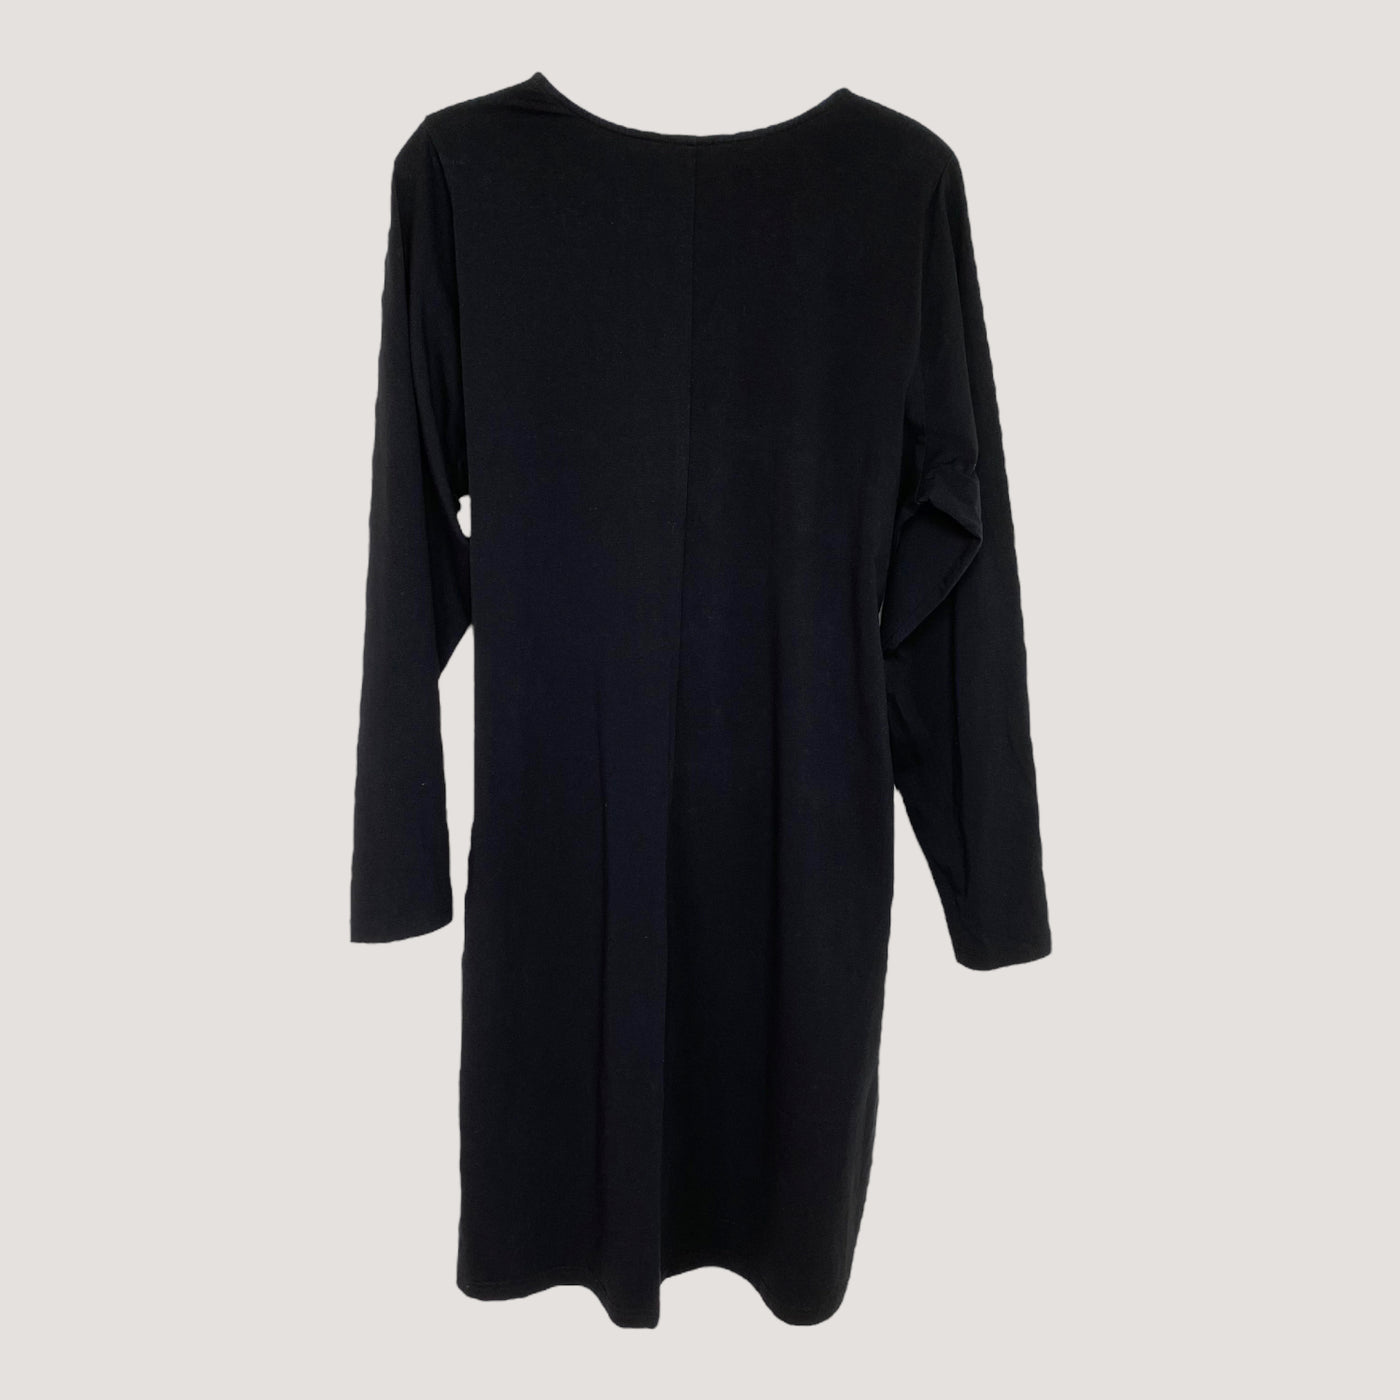 Kaiko belted dress, black | woman XL